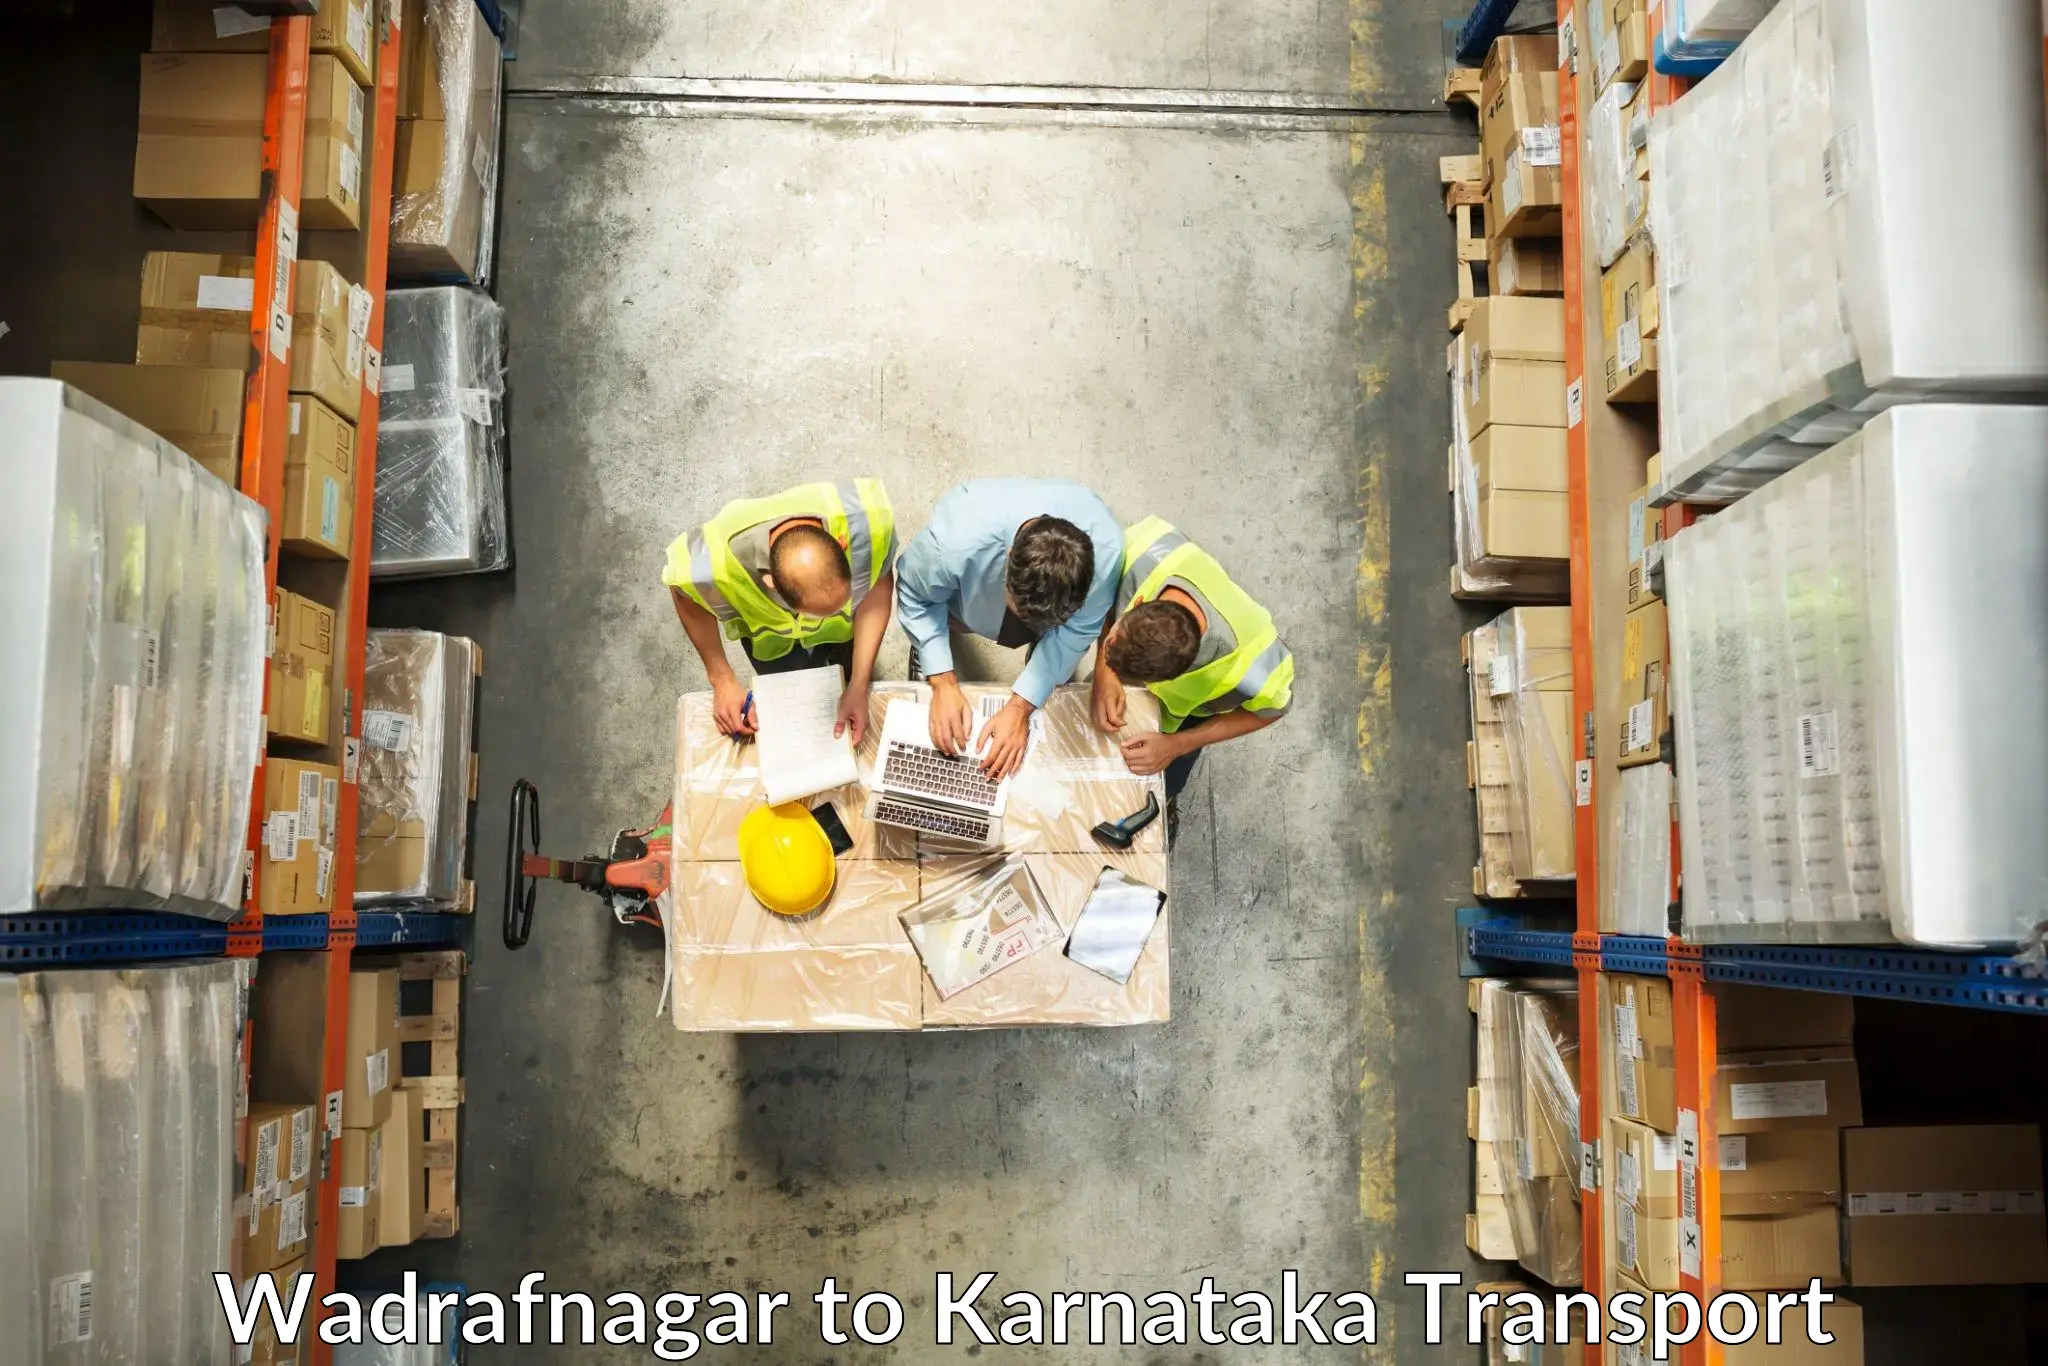 Nearby transport service Wadrafnagar to Karnataka